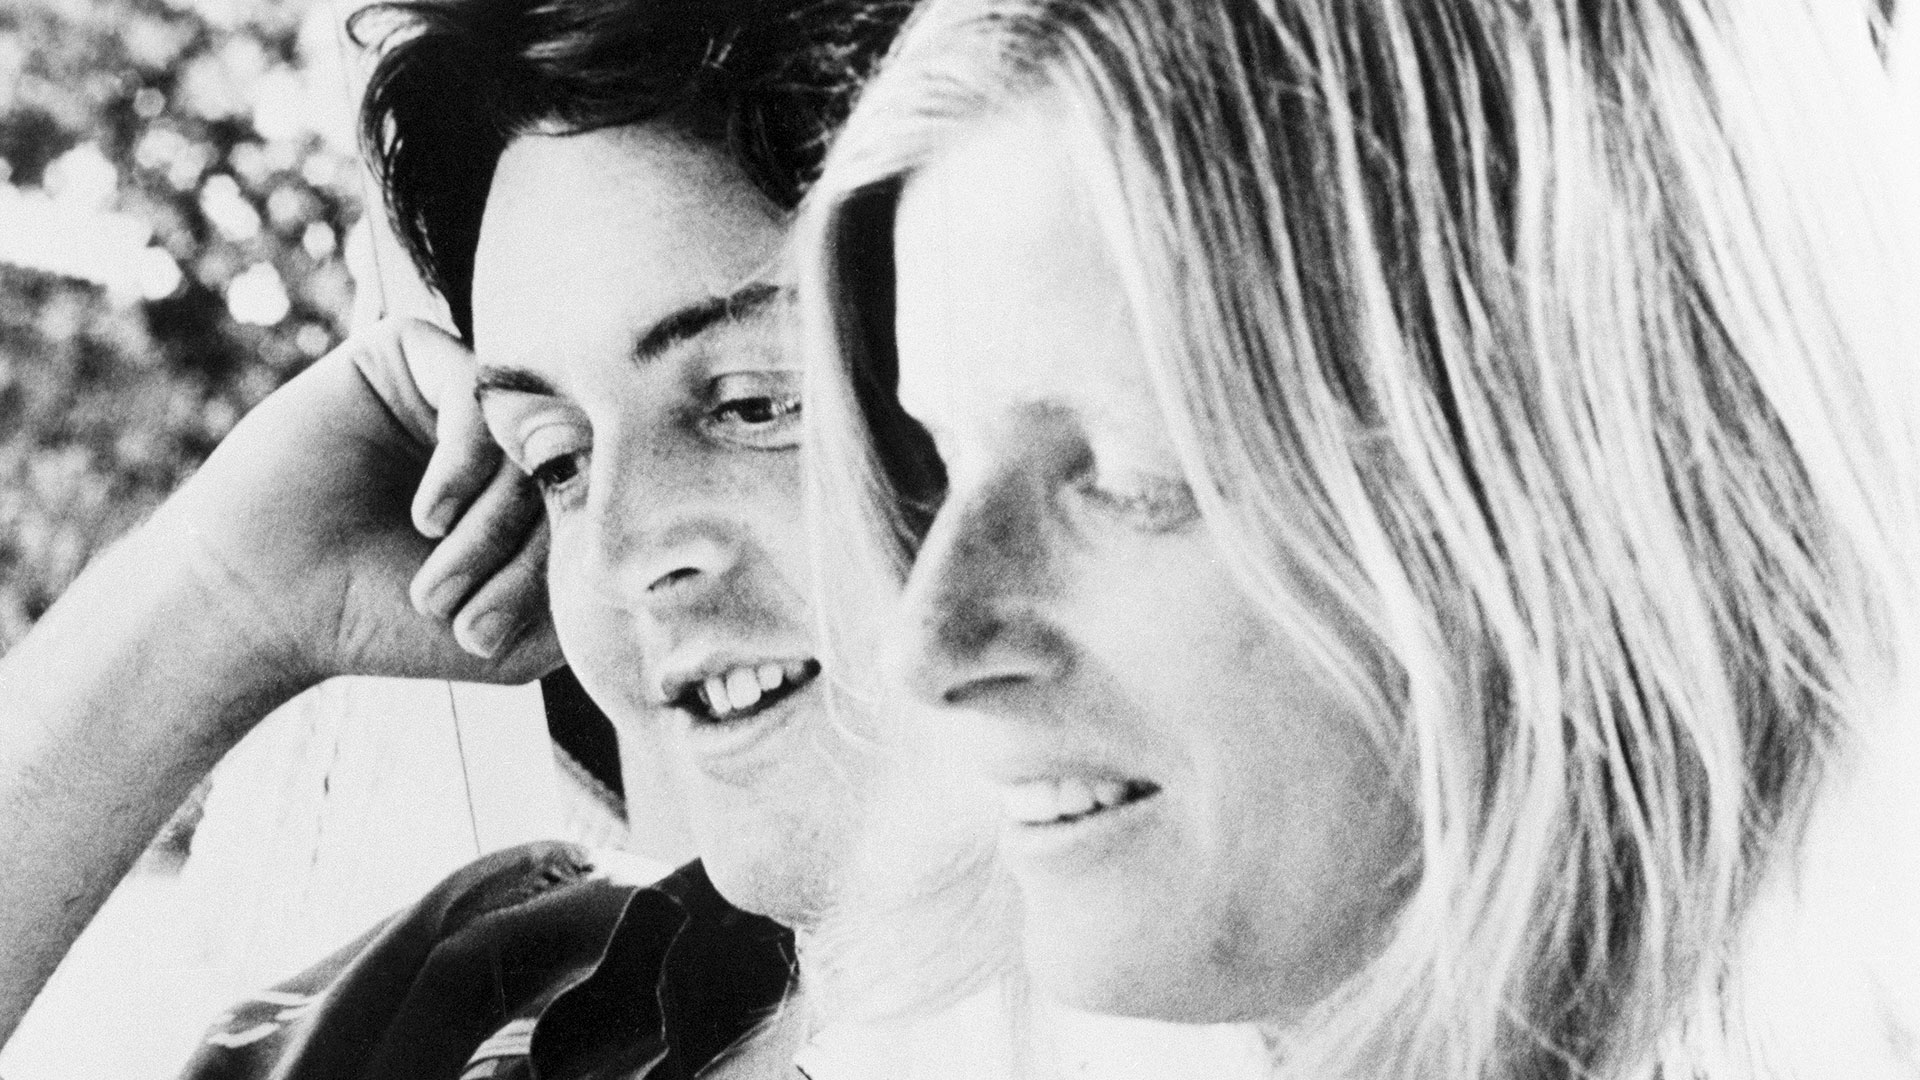 Beatles singer and guitarist Paul McCartney with his wife, Linda (1941 - 1998), circa 1970.